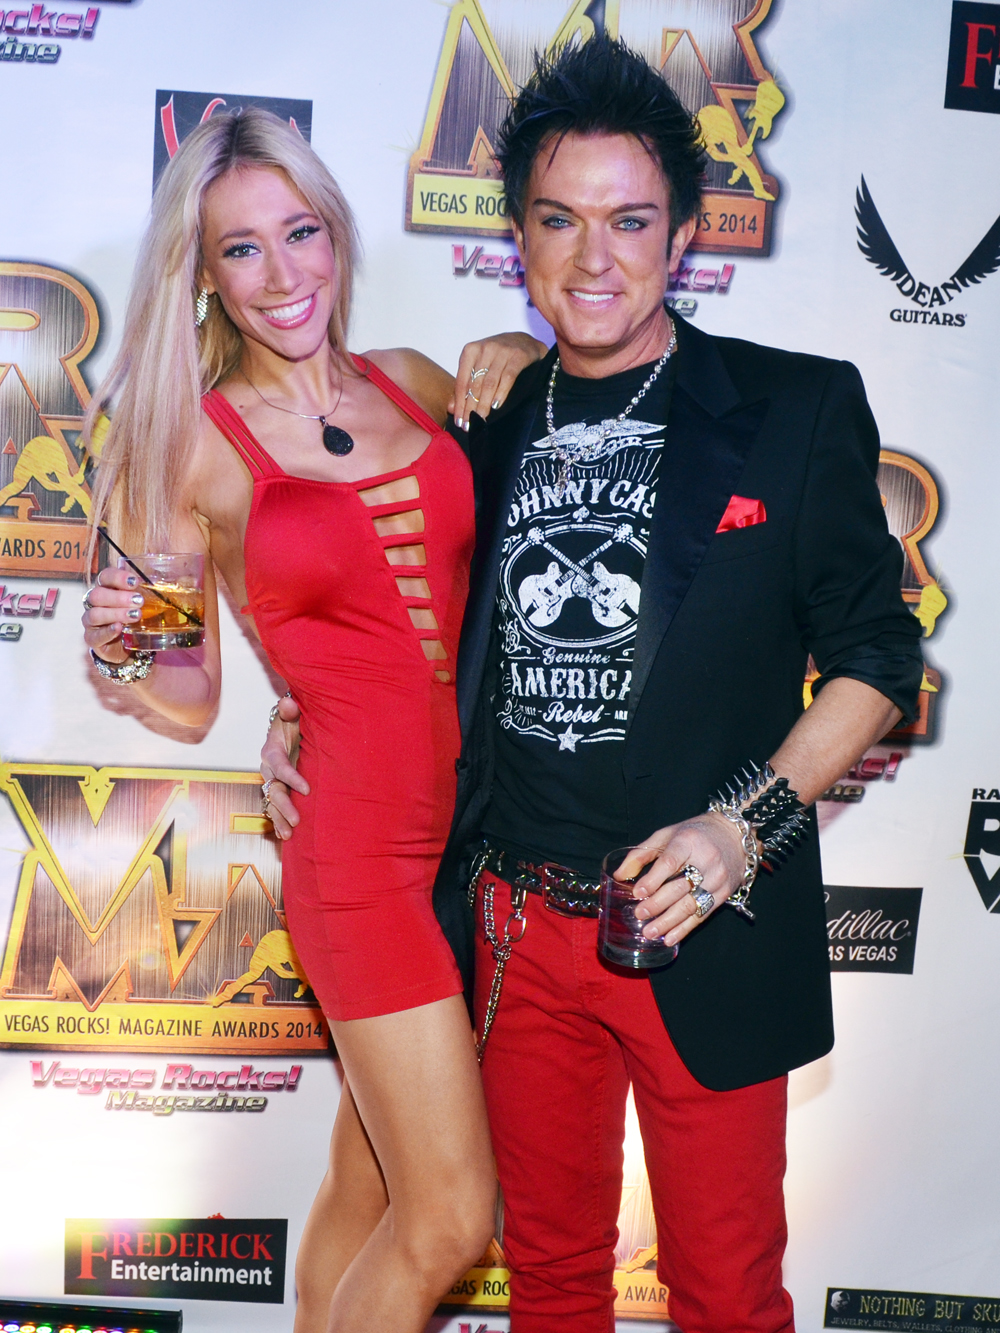 Lydia Ansel Chris Phillips of Zowie Bowie - Vegas Rocks Magazine Music Awards 2014 photo credit Stephen Thorburn 63713